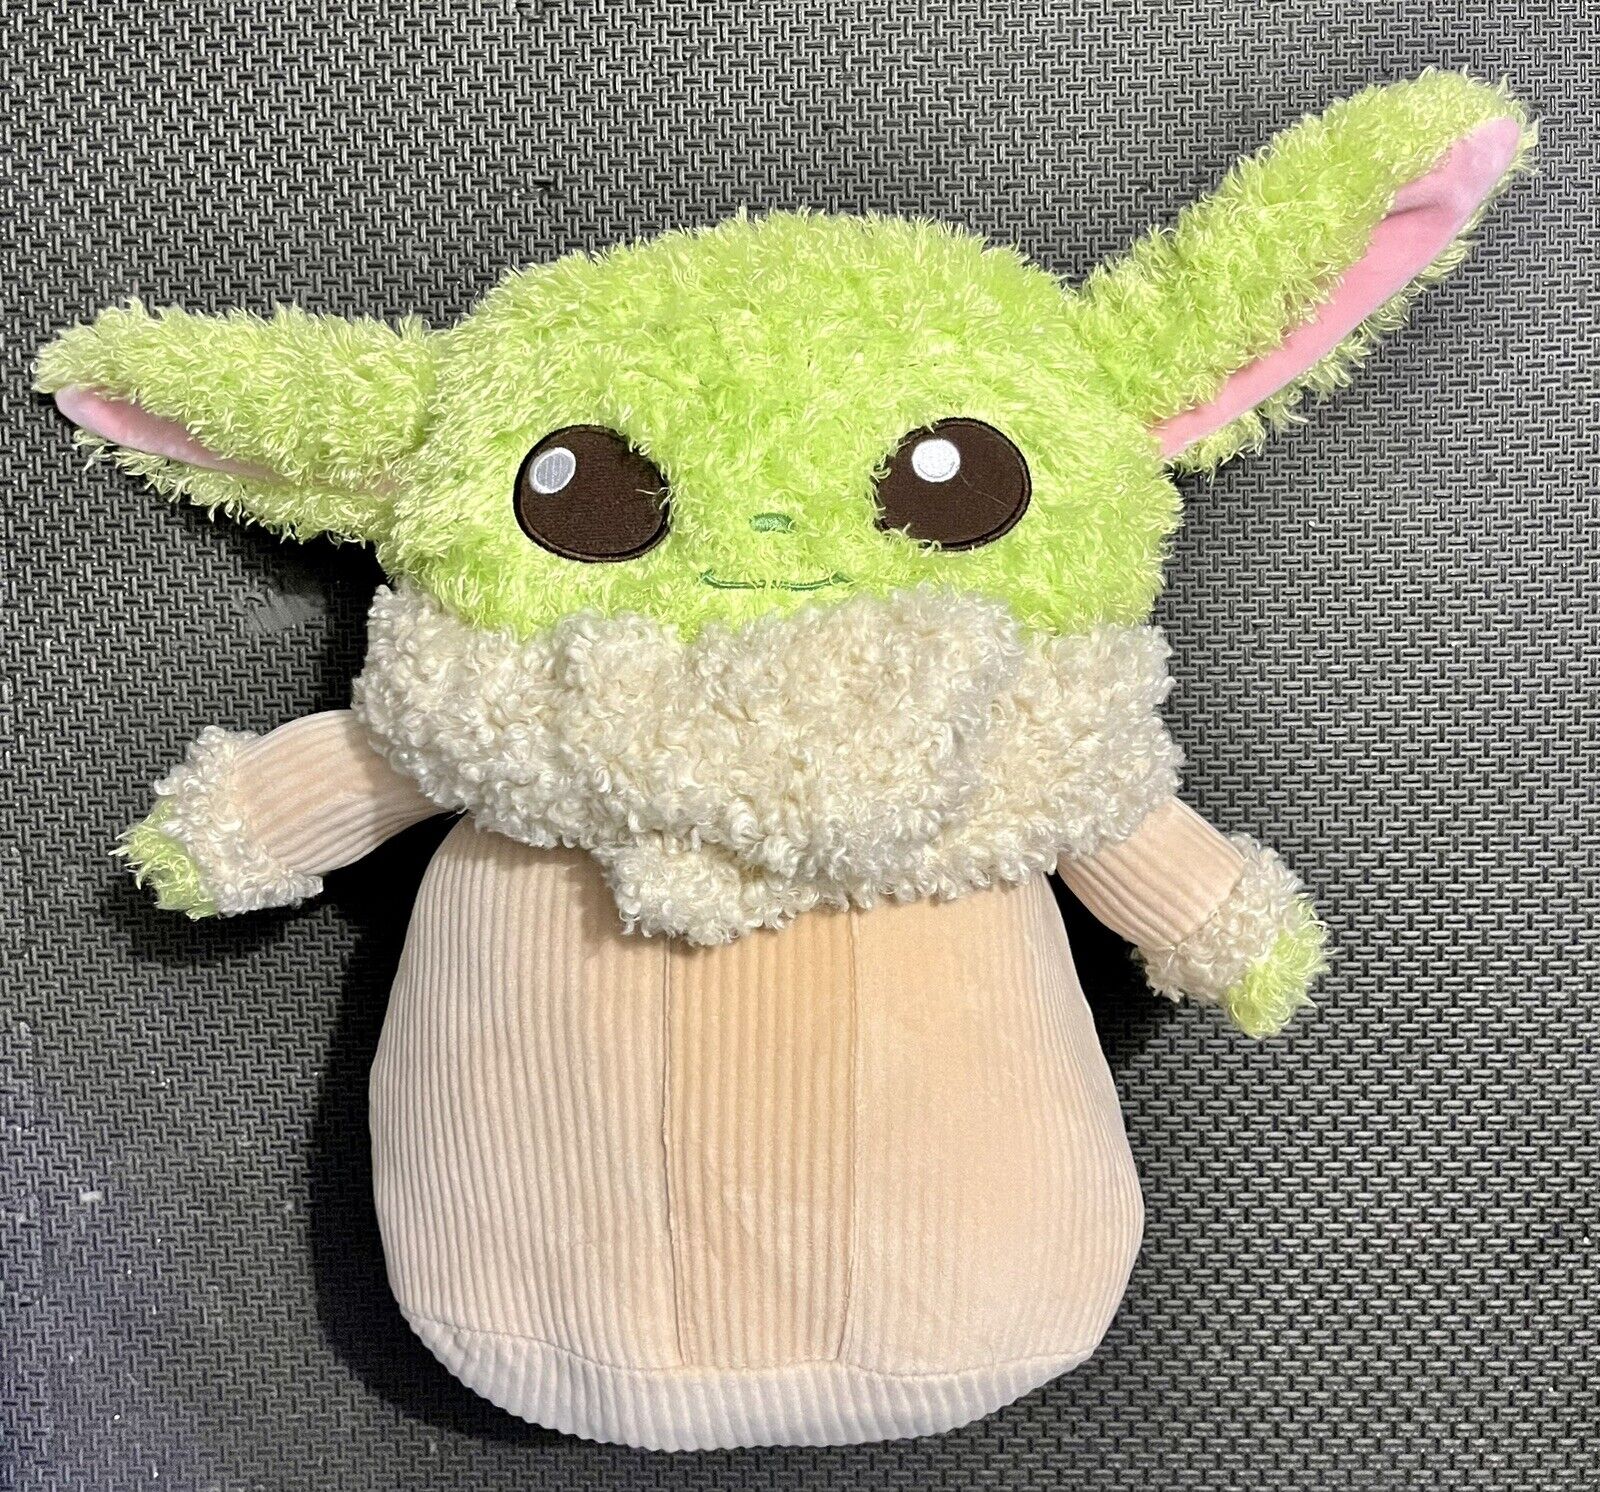 Mattel Star Wars Grogu Baby Yoda Plush 12-in With Sounds